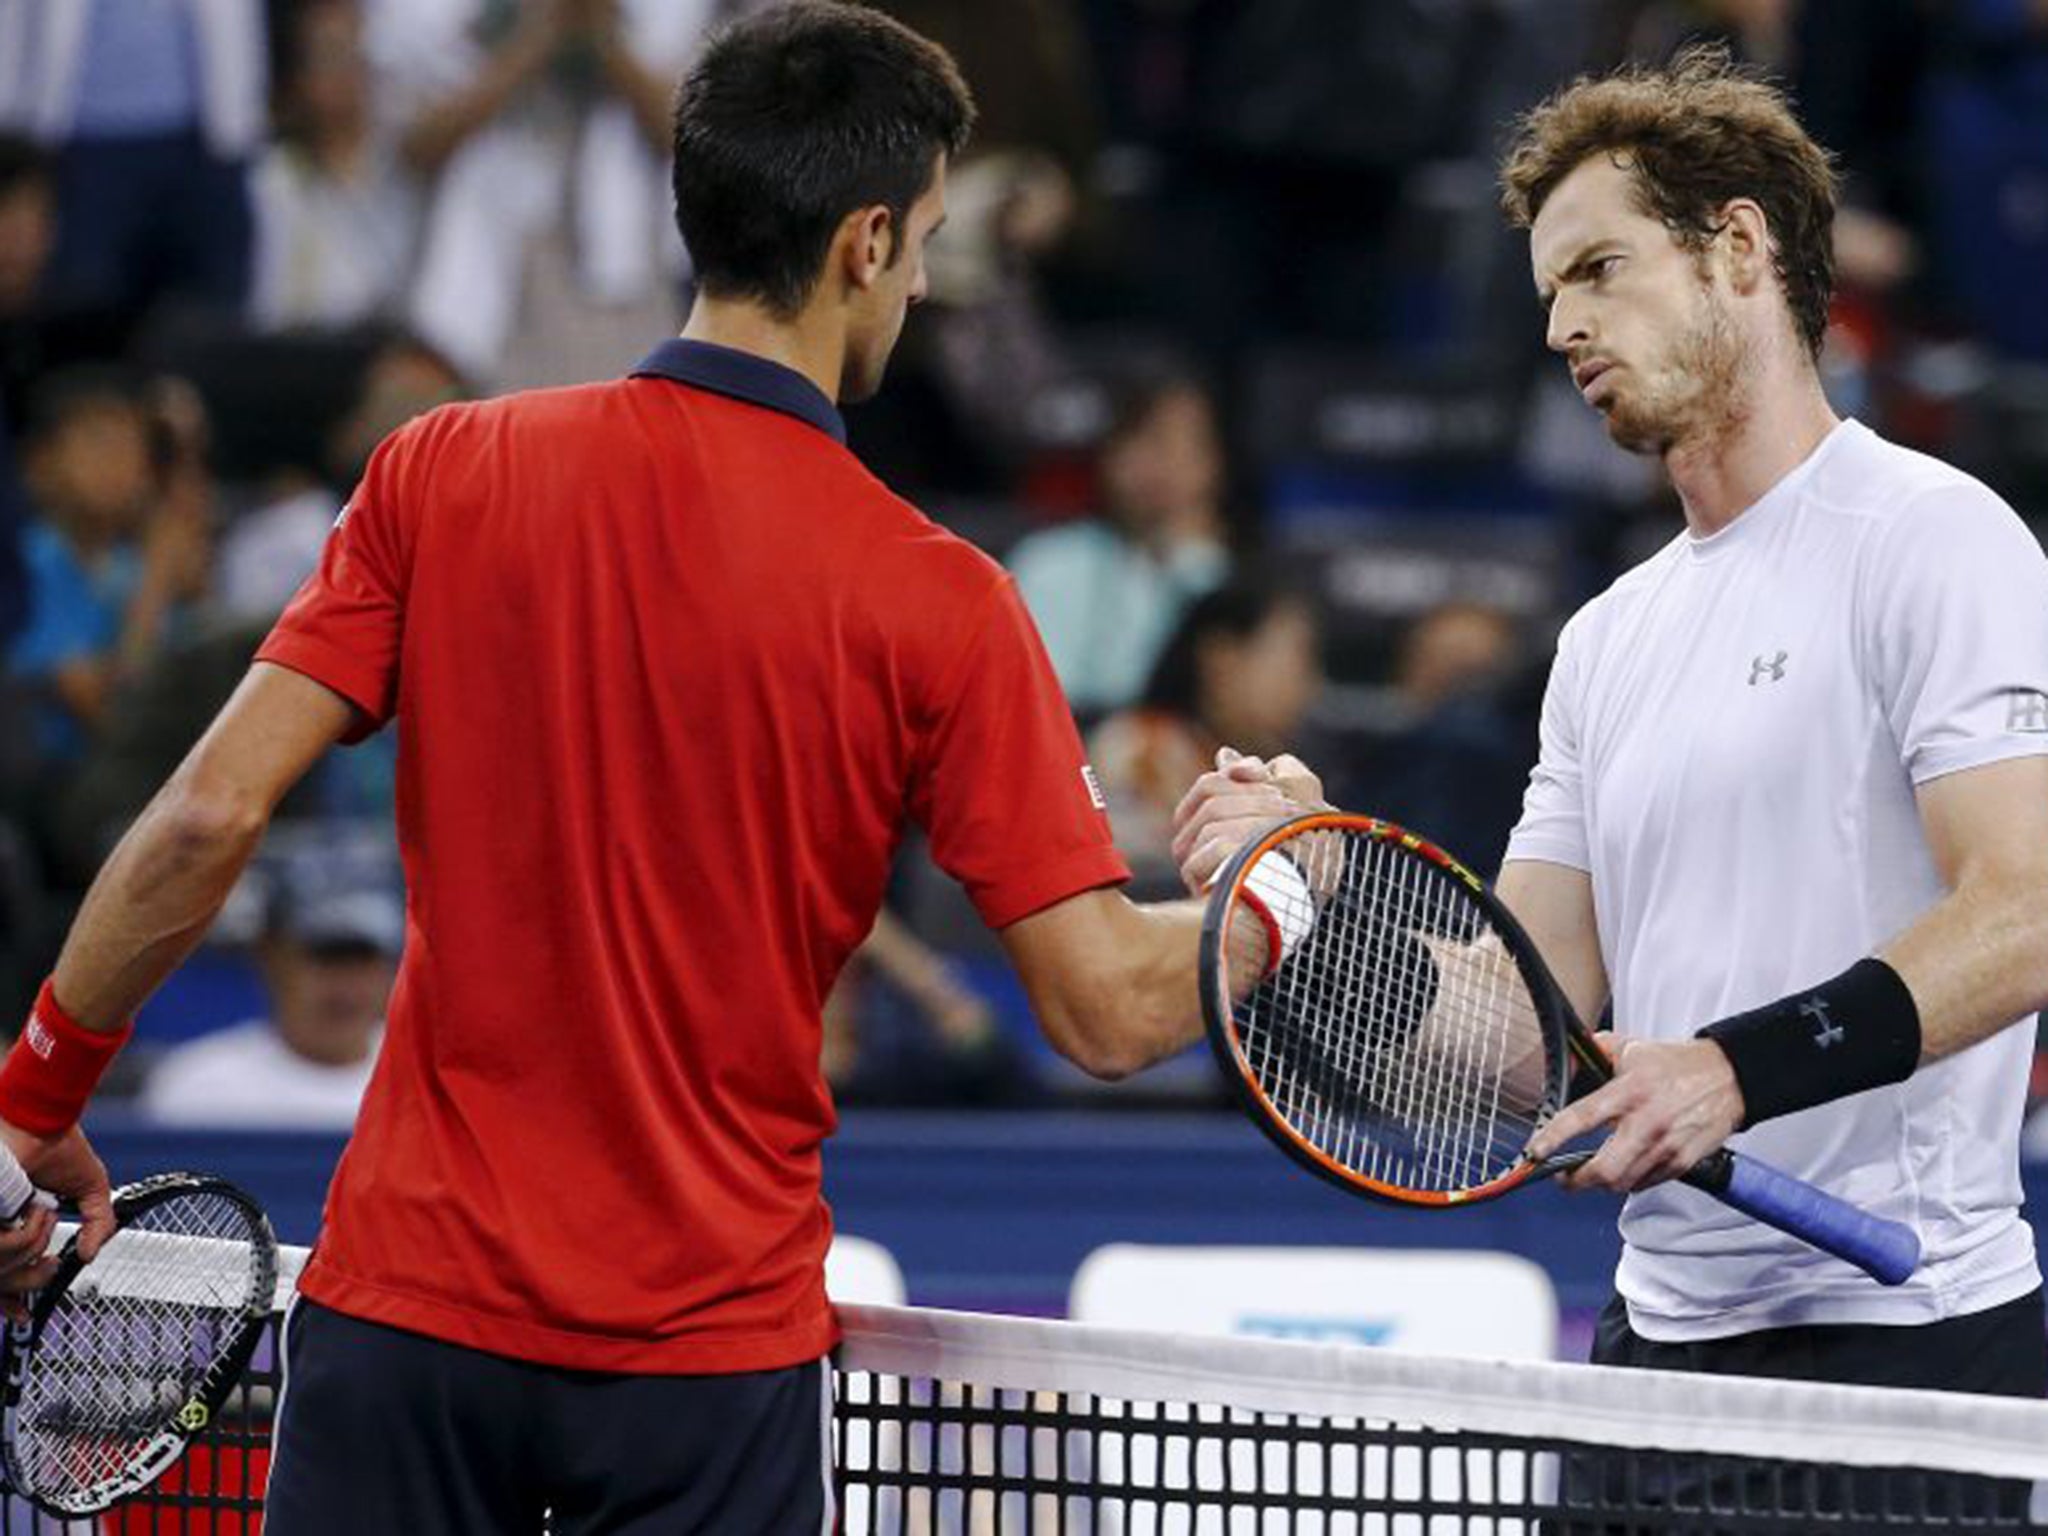 Andy Murray was beaten 6-1 6-3 by Novak Djokovic in the semi-finals